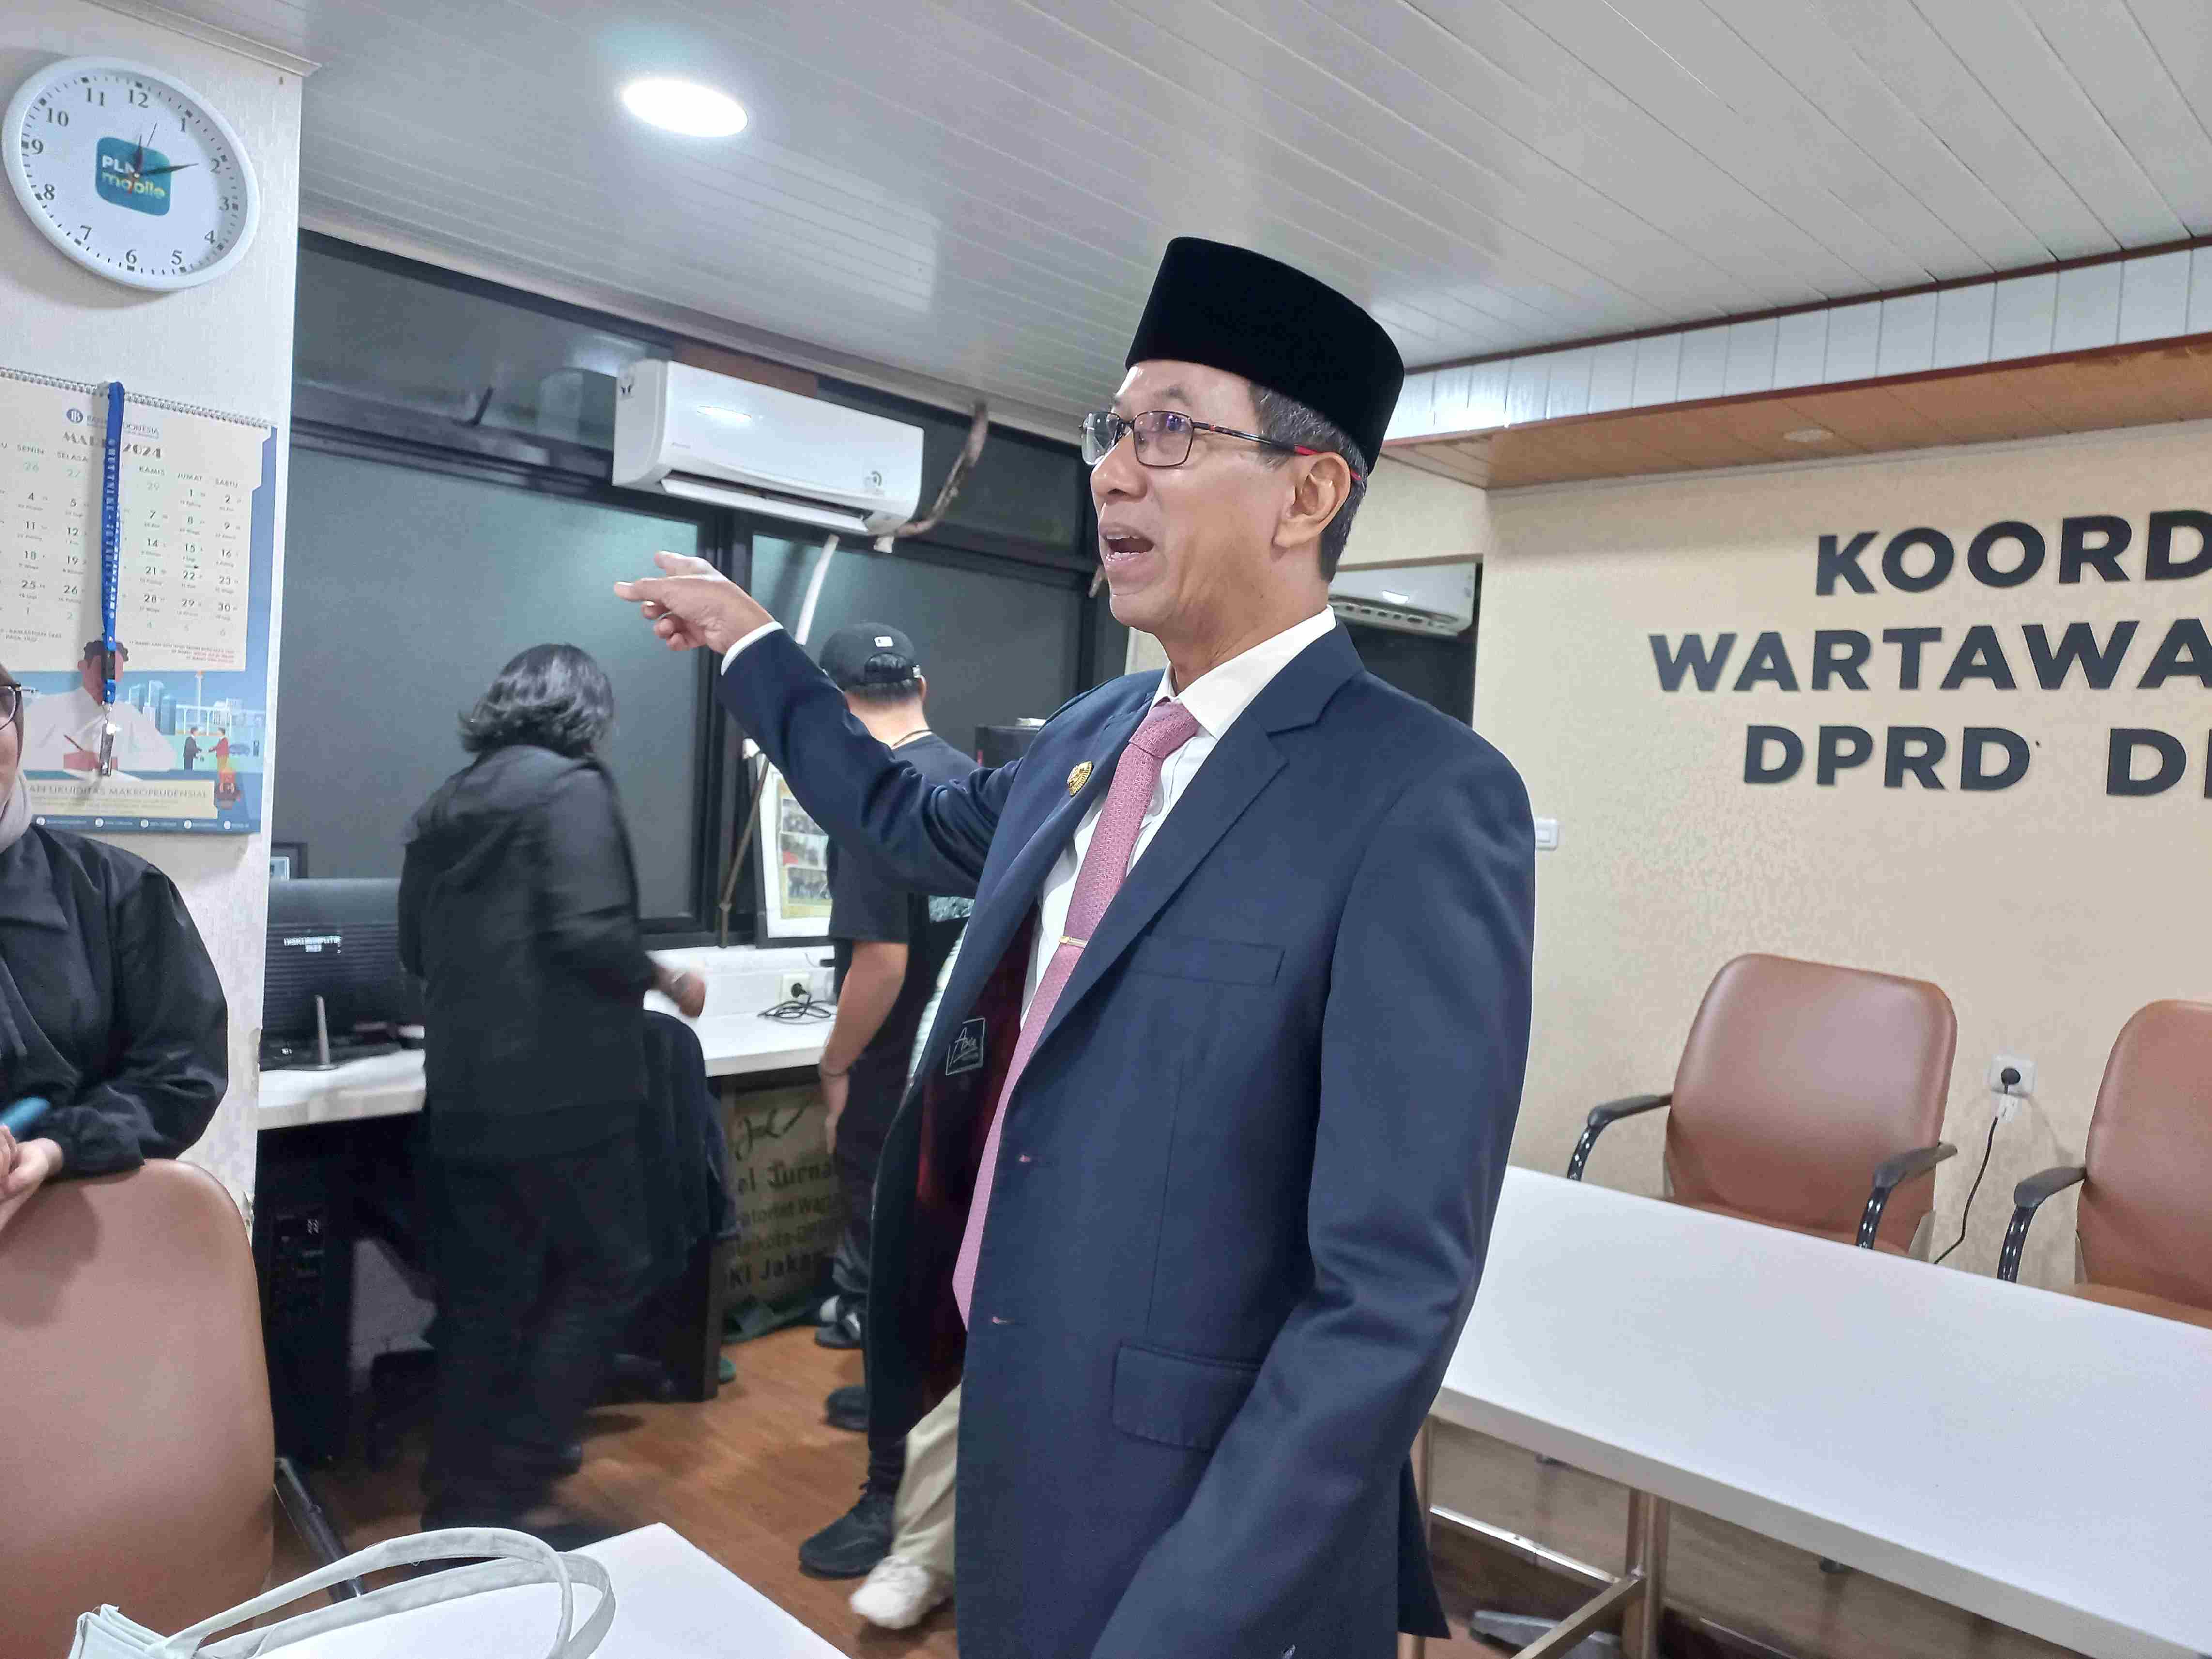 Ekonomi Jakarta Tumbuh, PJ Gubernur: Sejalan dengan Perkembangan Ekonomi Nasional